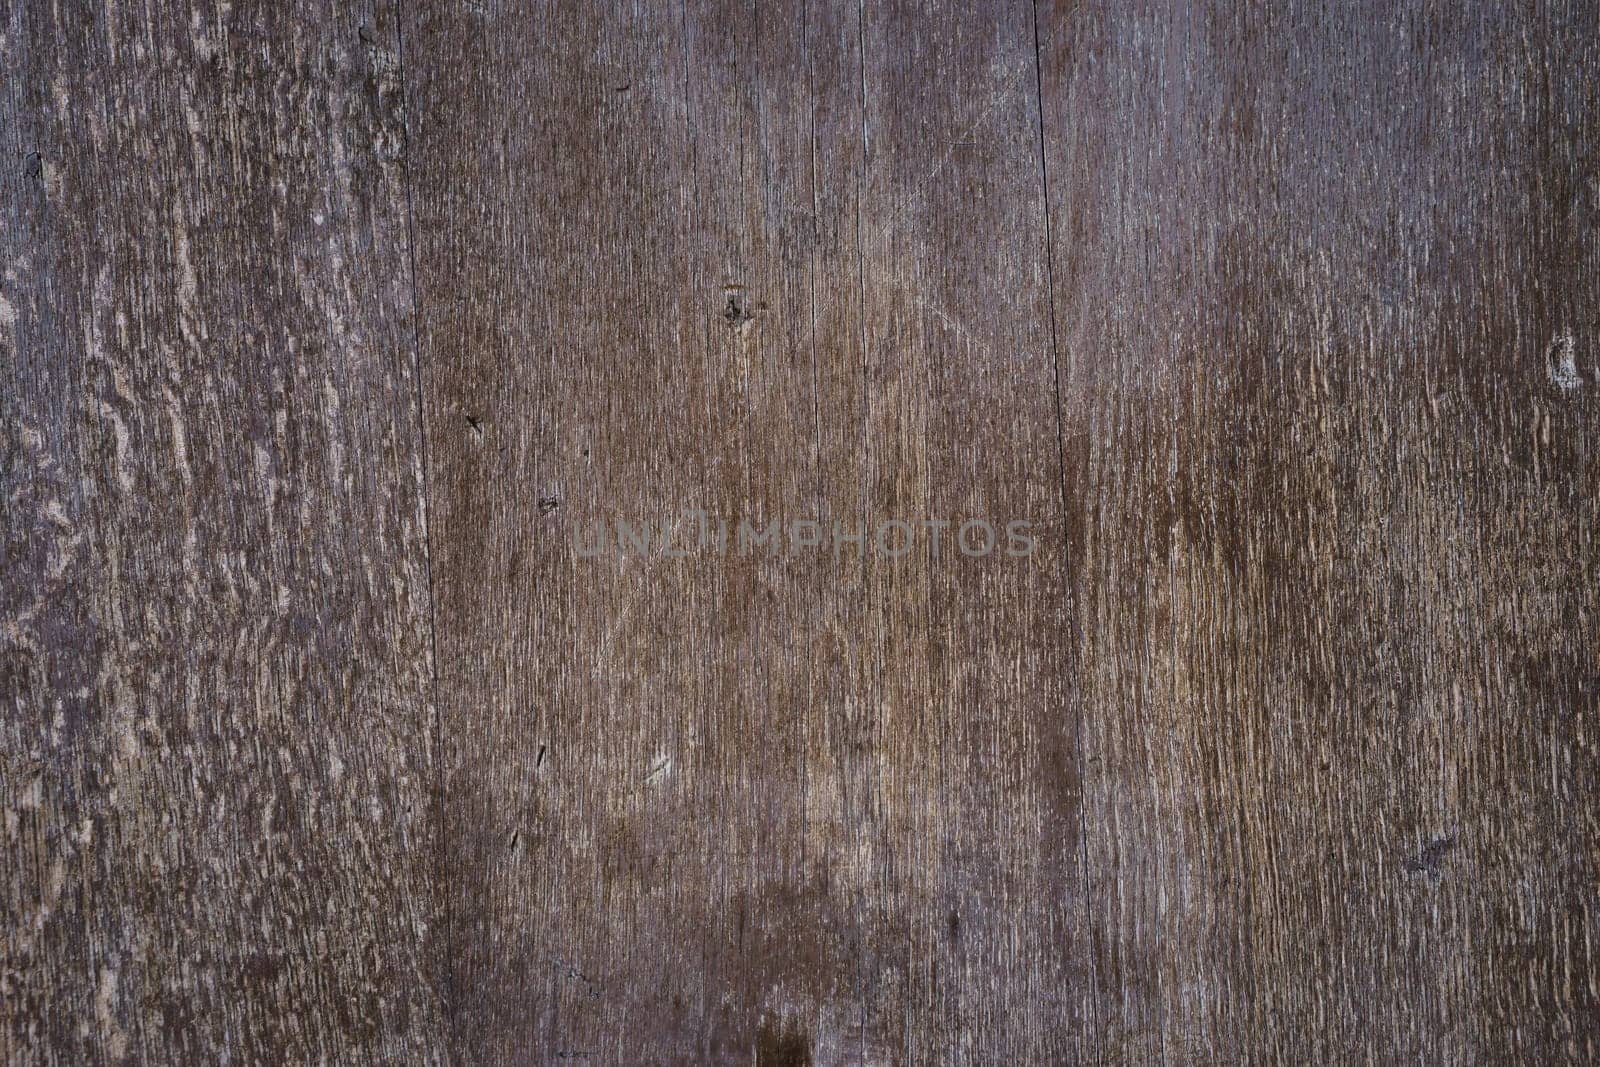 Texture of an old wooden door in brown tones. Concept backgrounds and stencils.